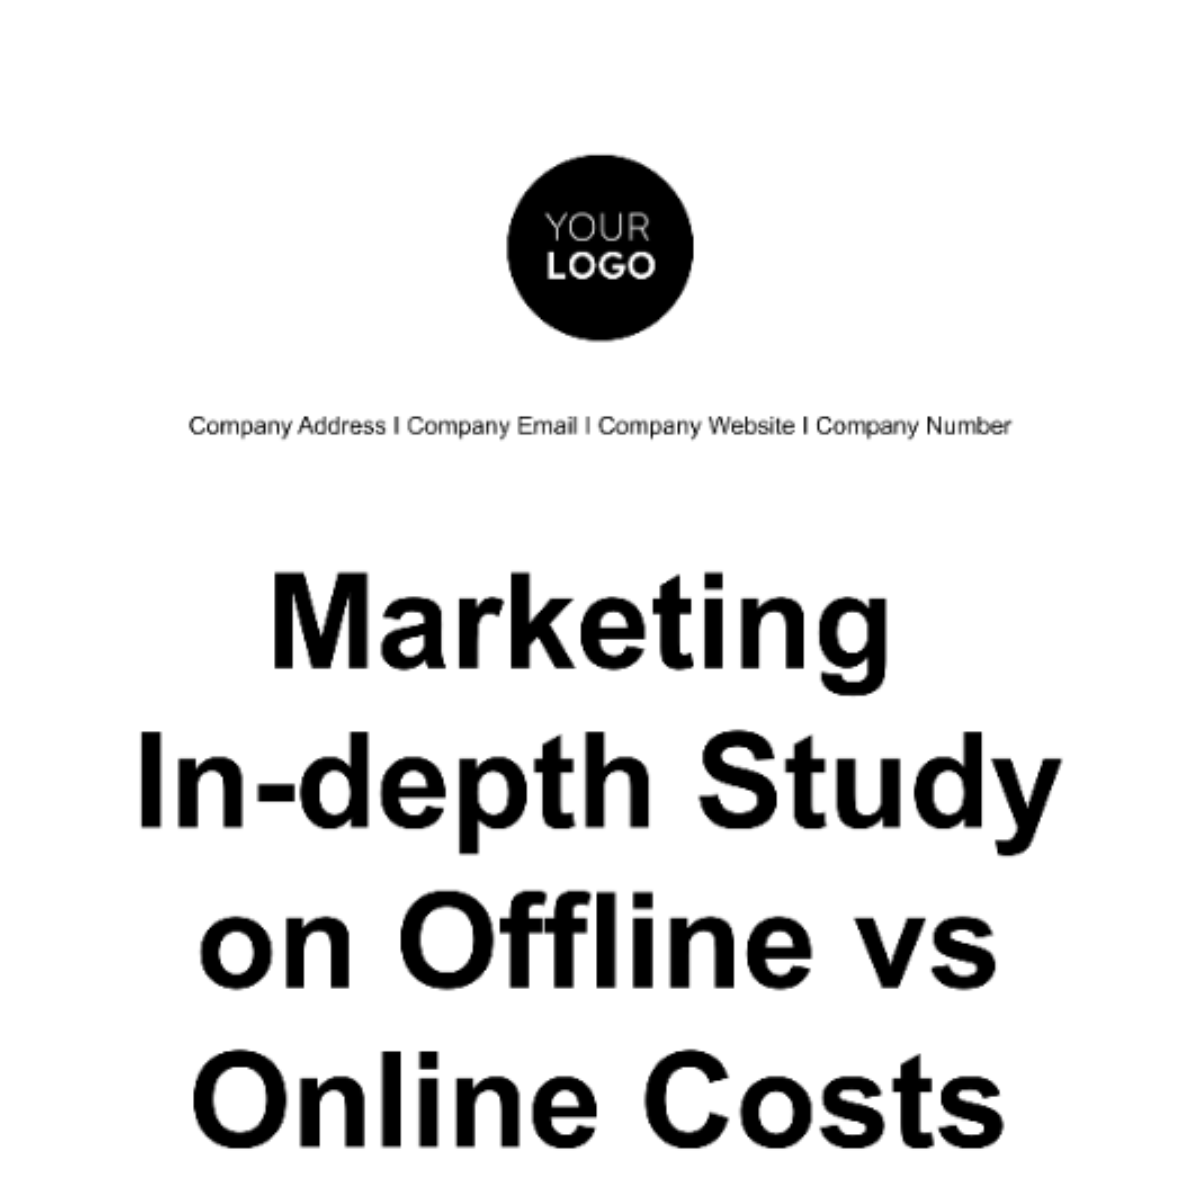 Free Marketing In-depth Study on Offline vs Online Costs Template